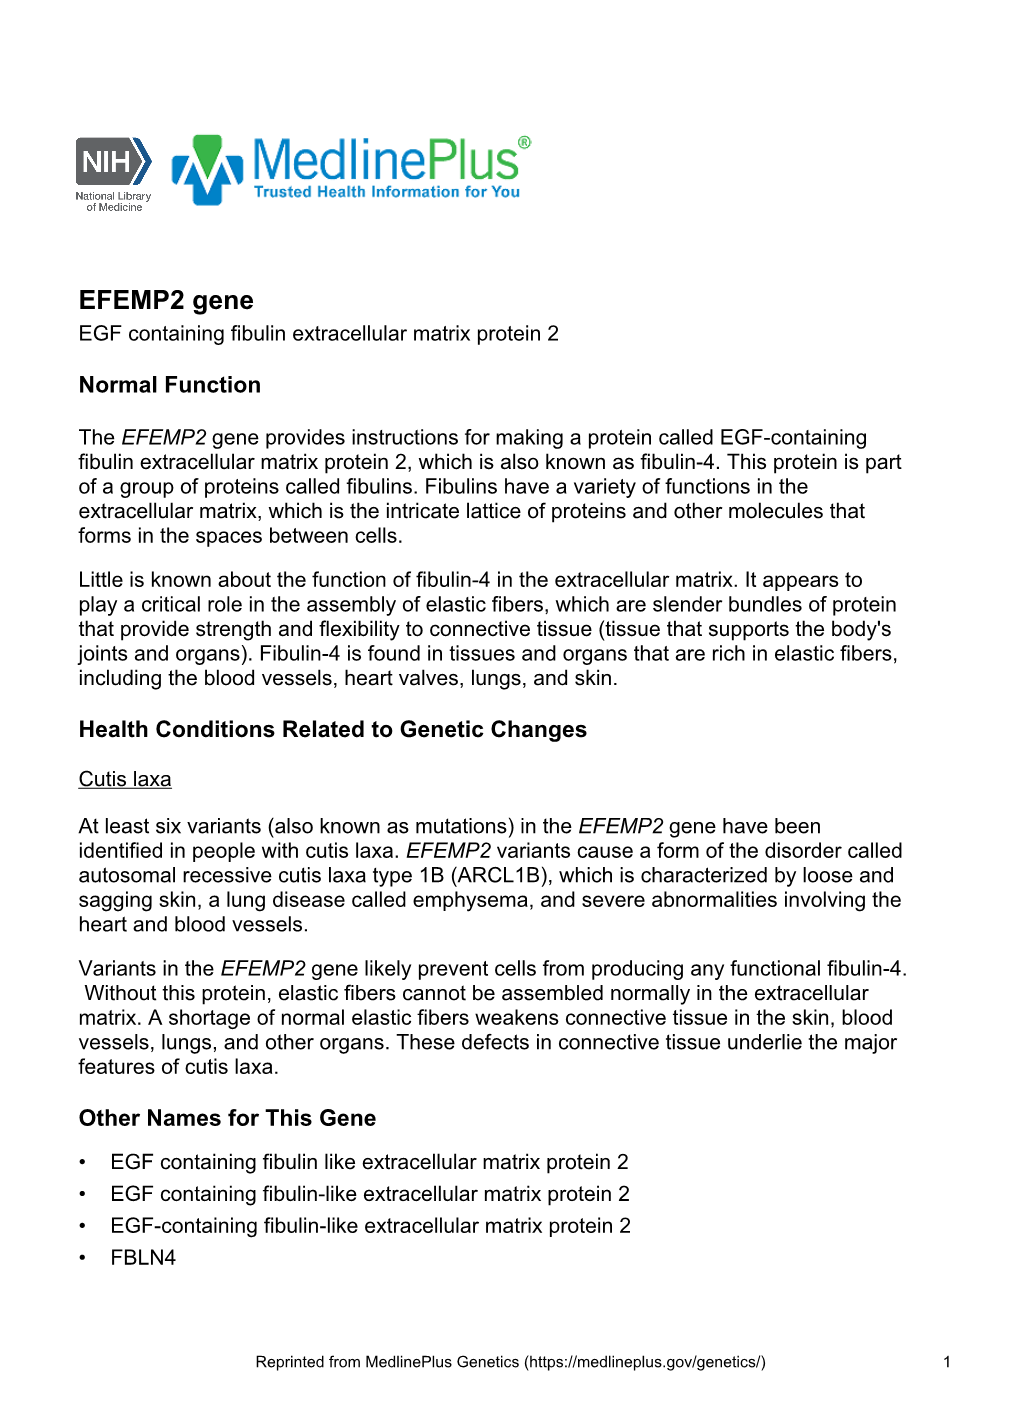 EFEMP2 Gene EGF Containing Fibulin Extracellular Matrix Protein 2